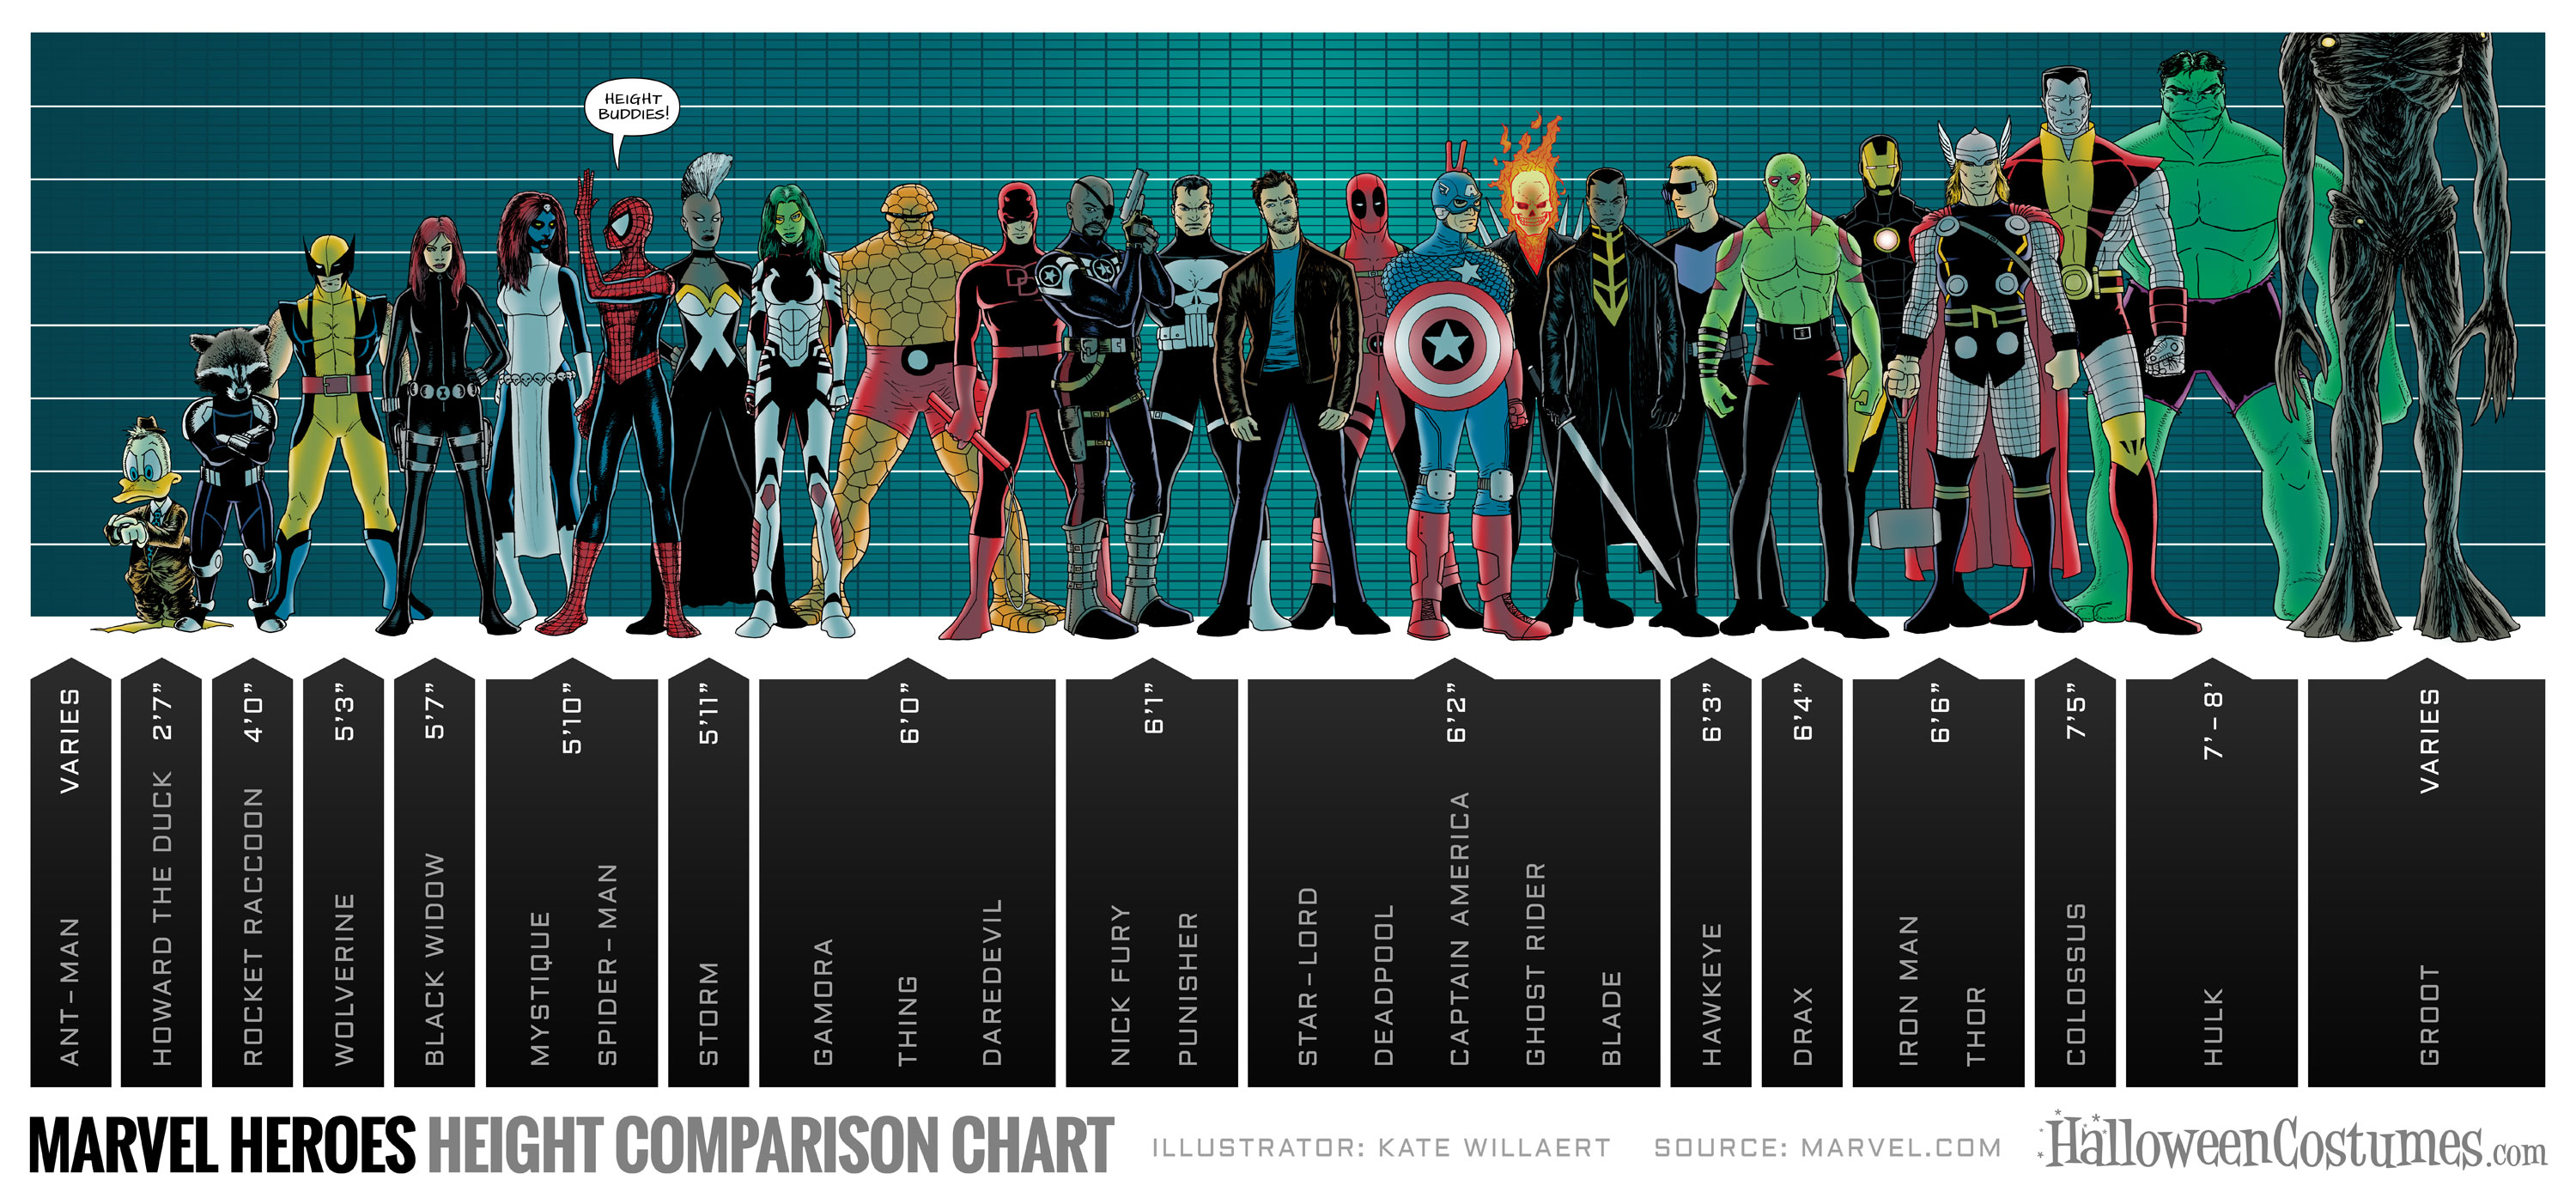 The Marvel Superhero Height Chart